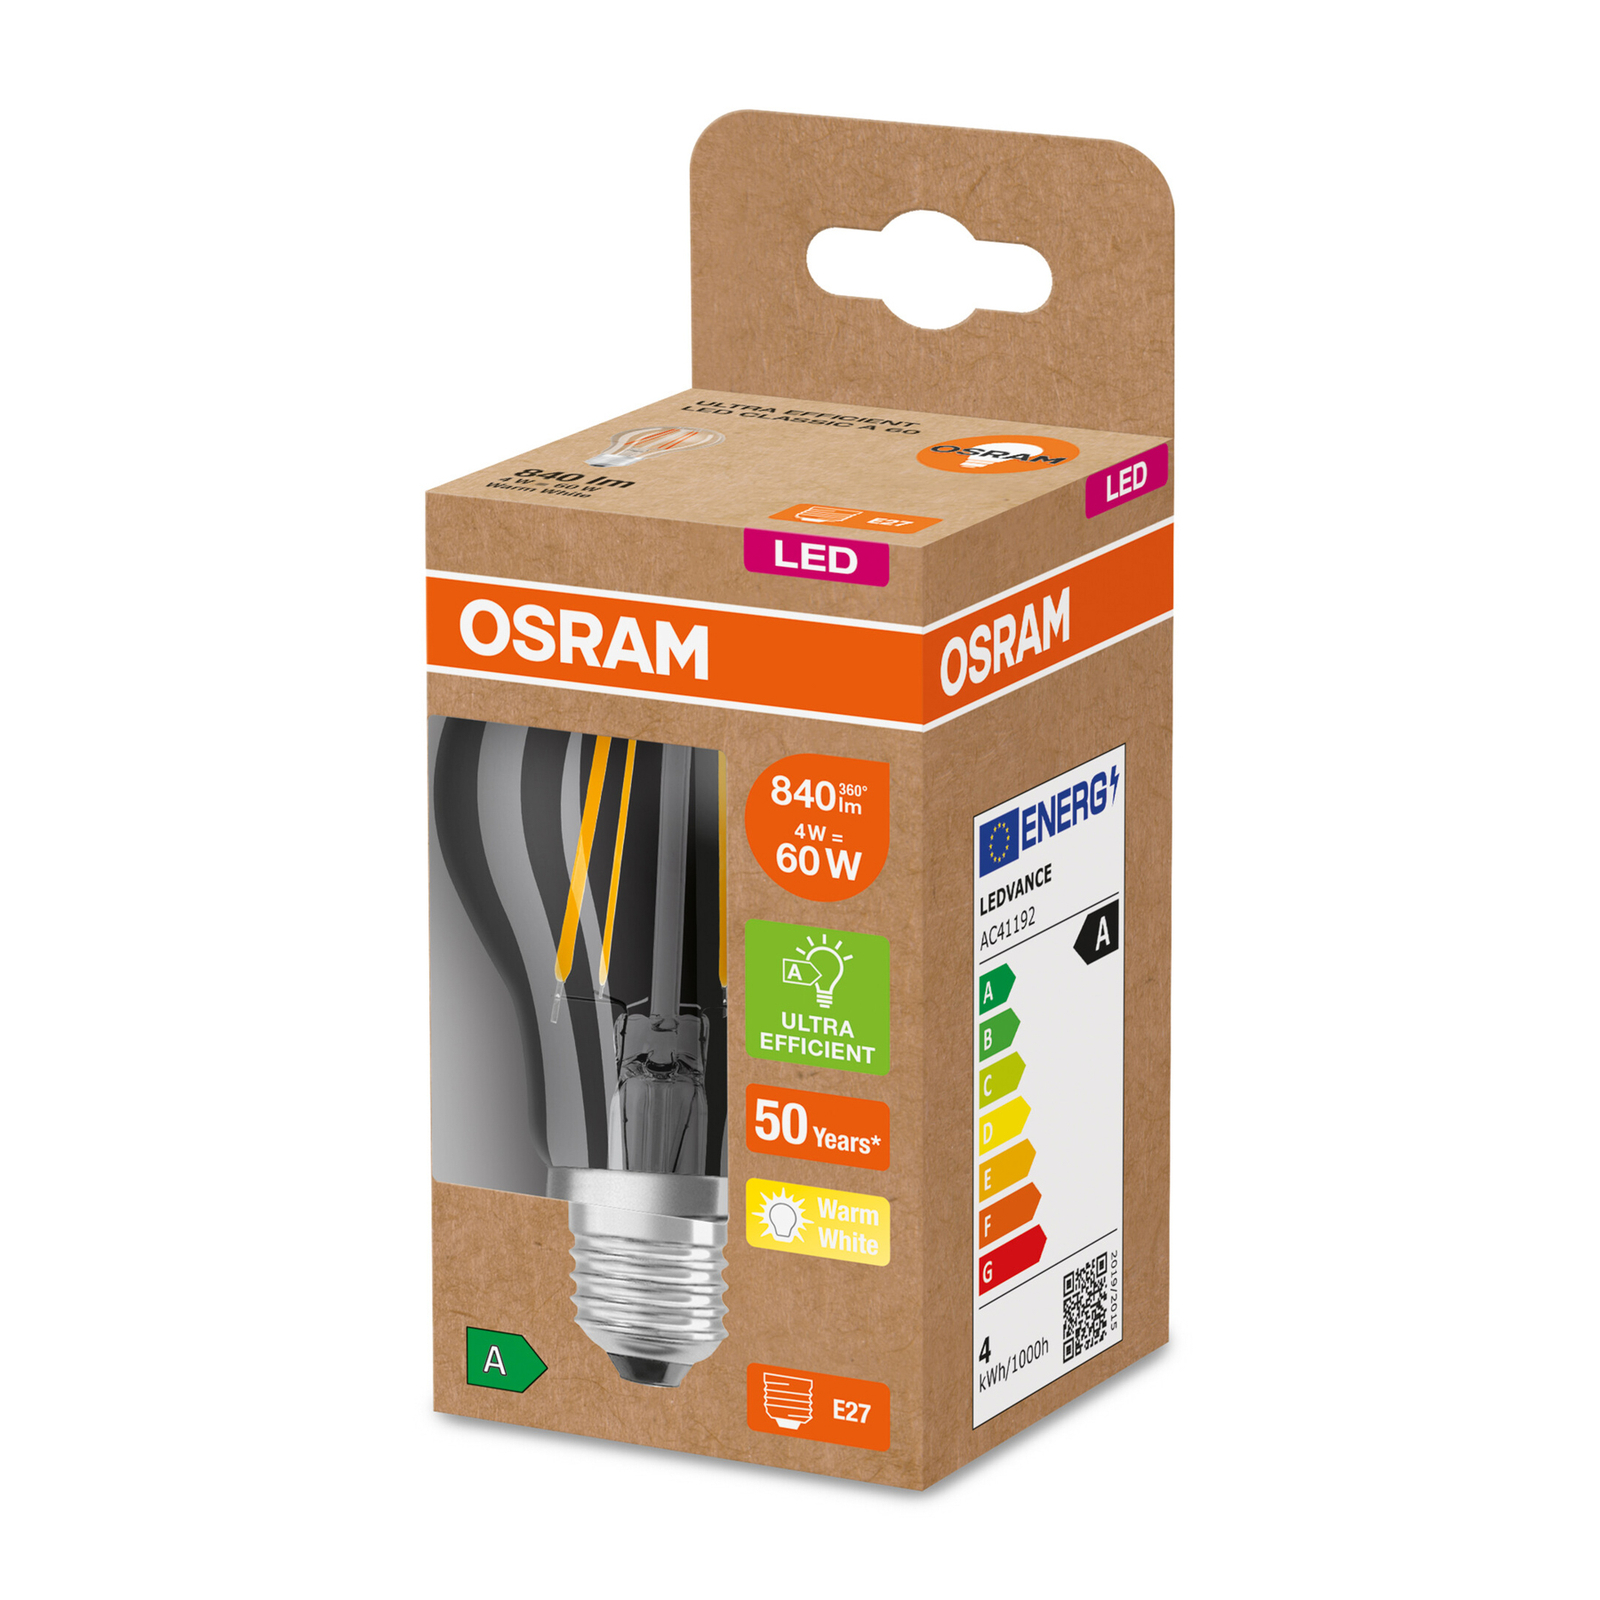 OSRAM LED bulb E27 A60 4W 840lm 3,000K clear